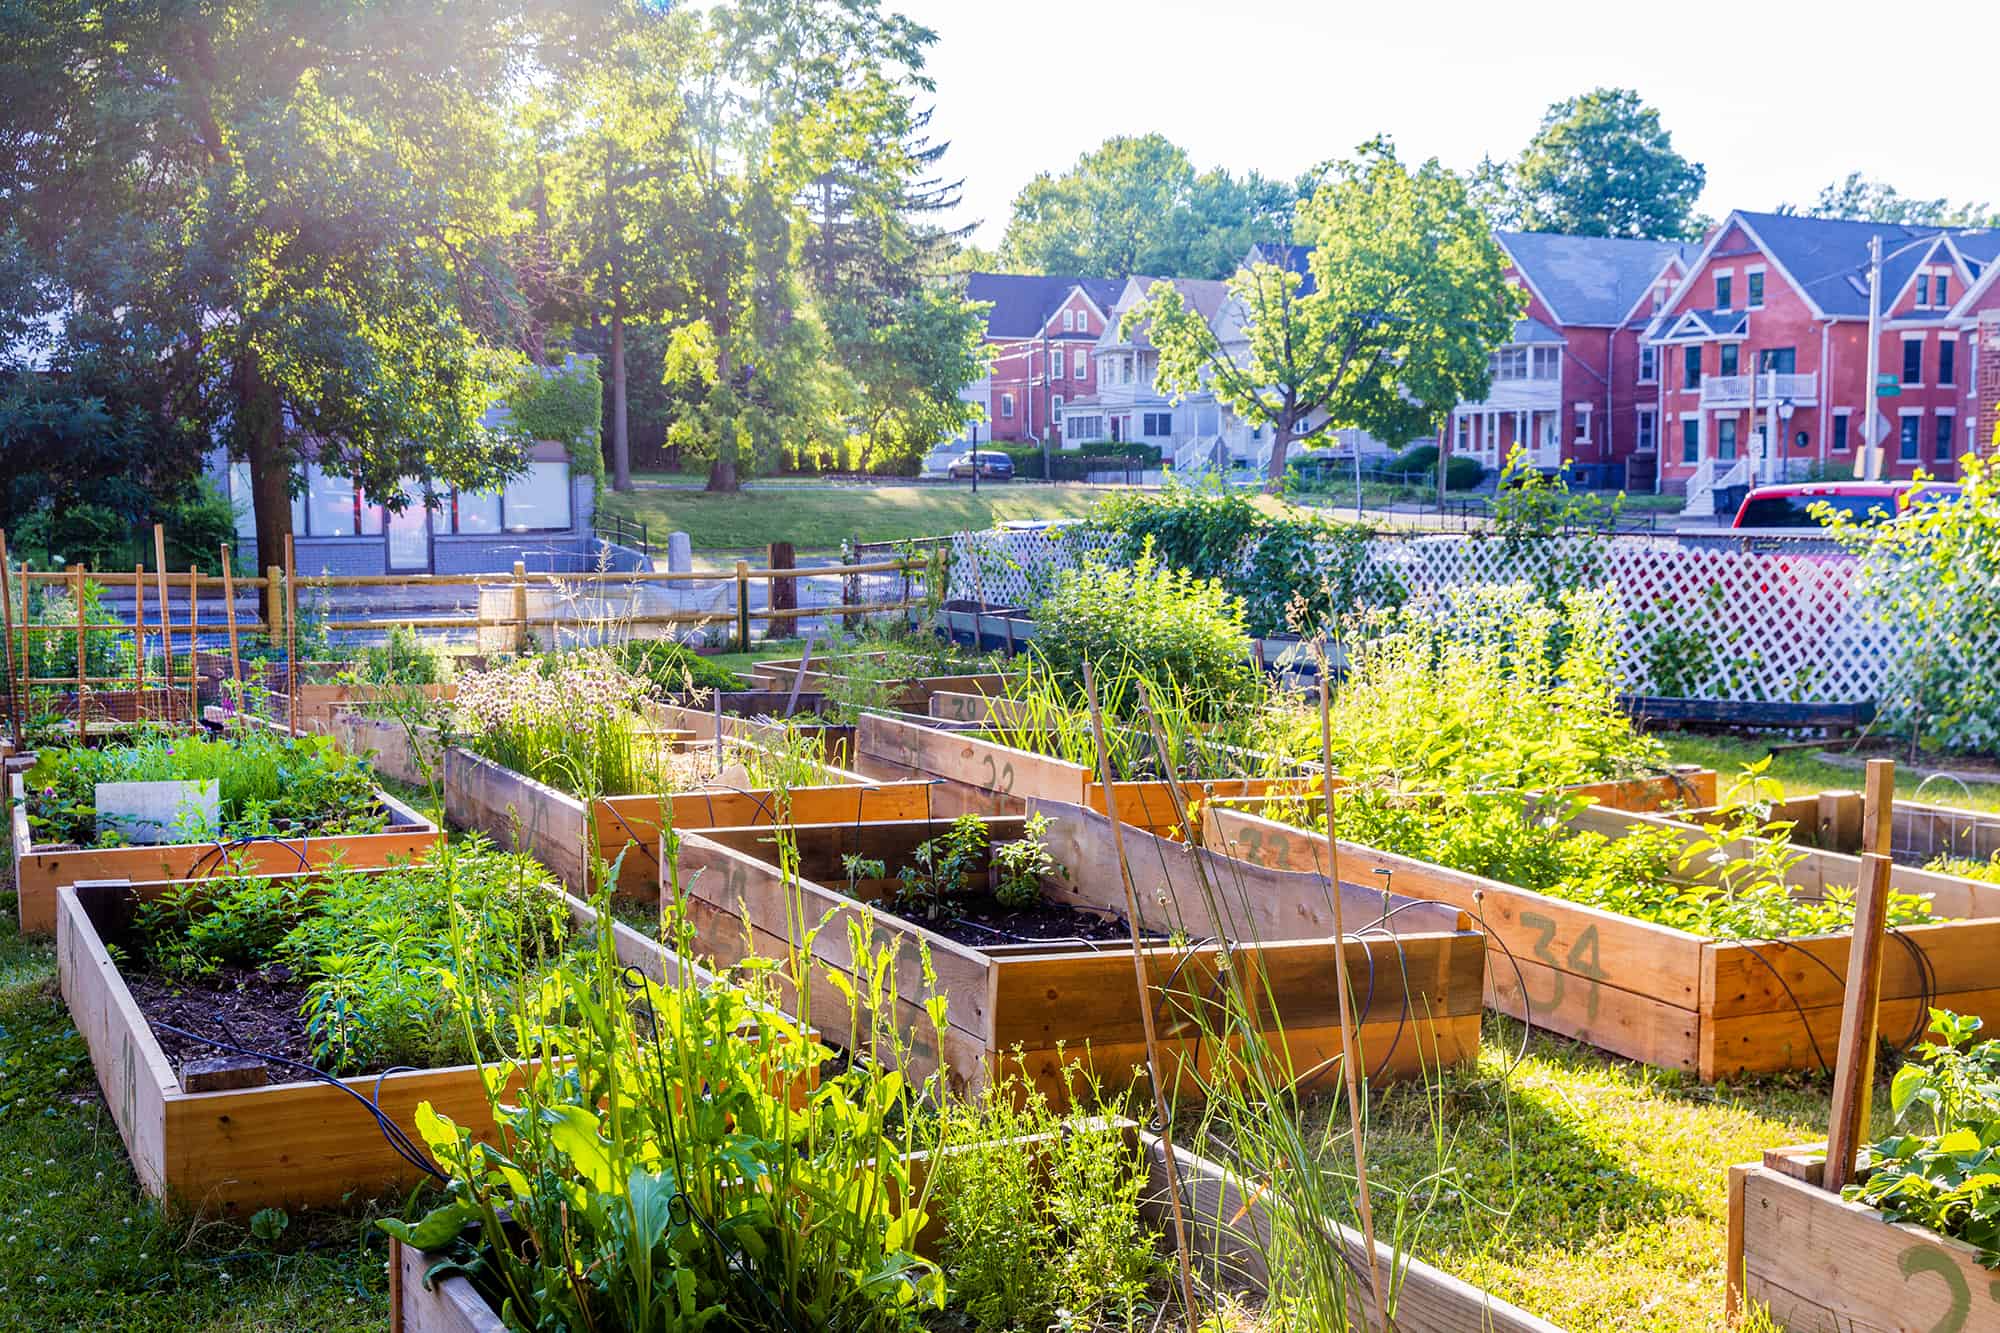 Bringing the Green Crowdfunding for Community Gardens Go Green Brooklyn